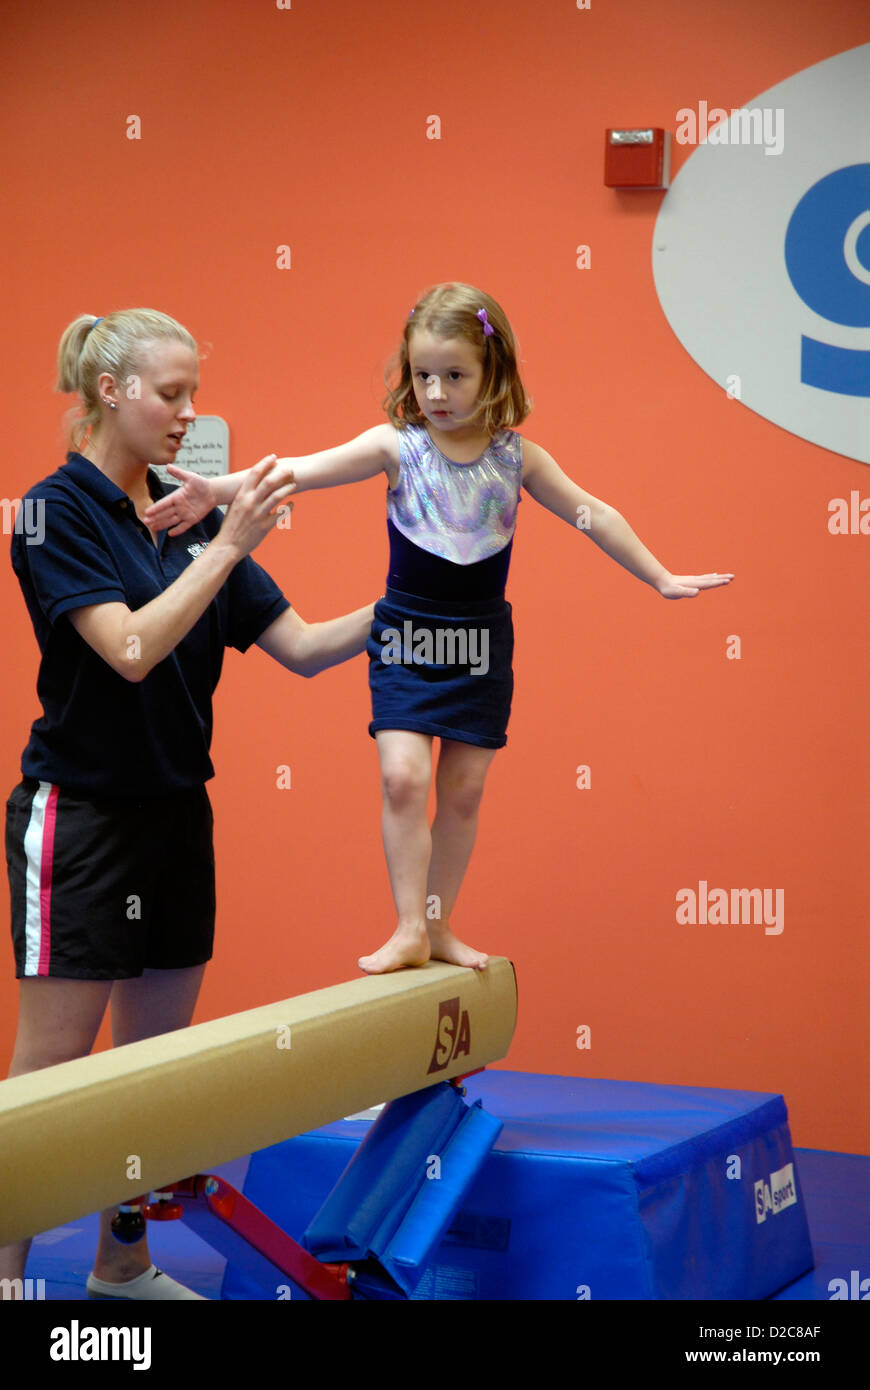 Gymnastics Class. Instructor Holding 4 1/2 Year Old Girl On Balance Beam Stock Photo